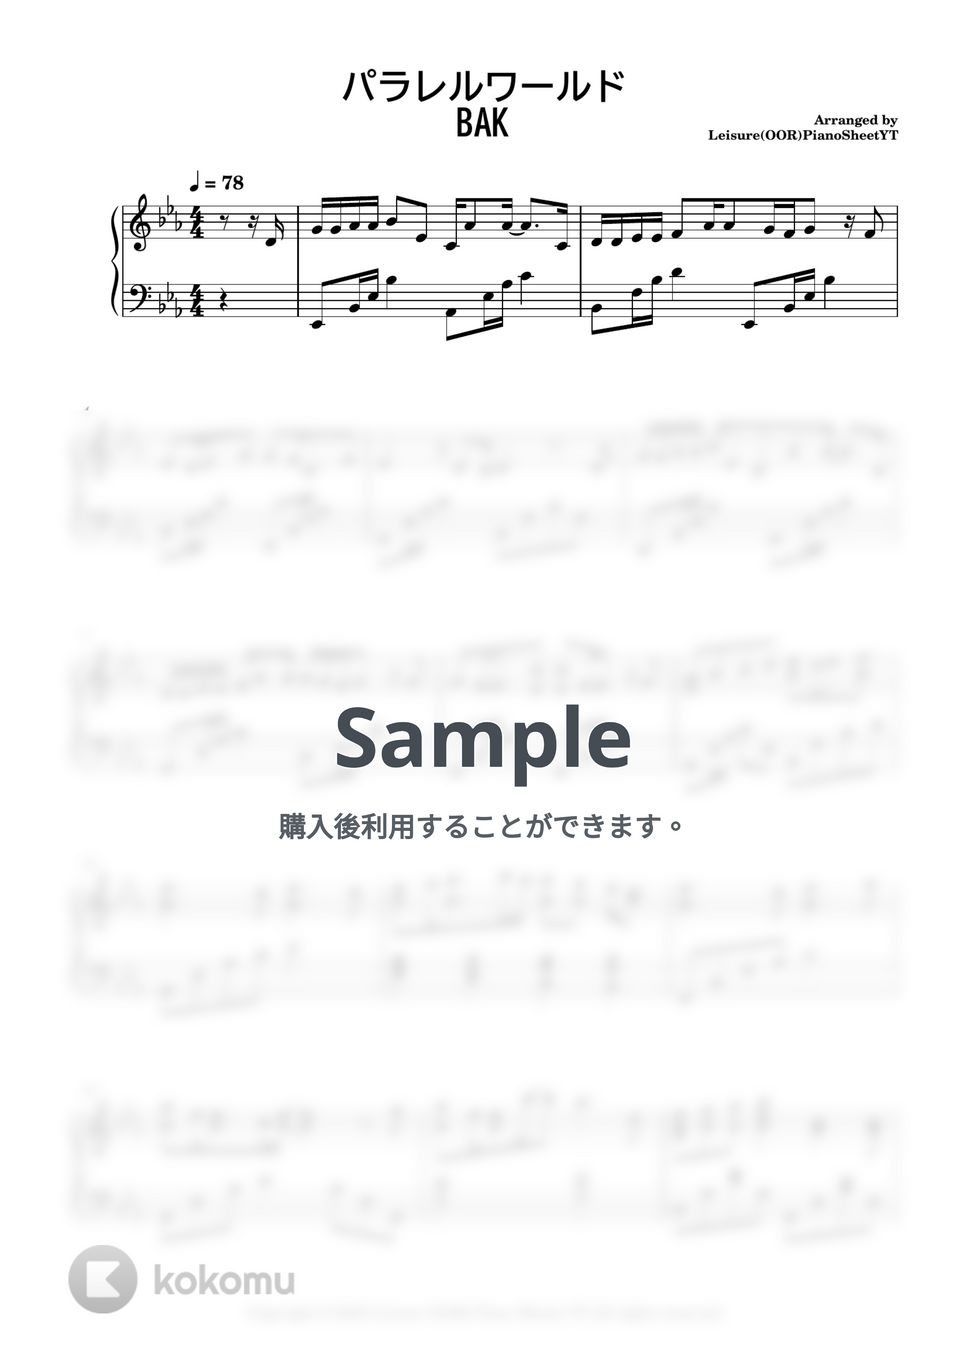 BAK - パラレルワールド by Leisure (OOR) Piano Sheets YT